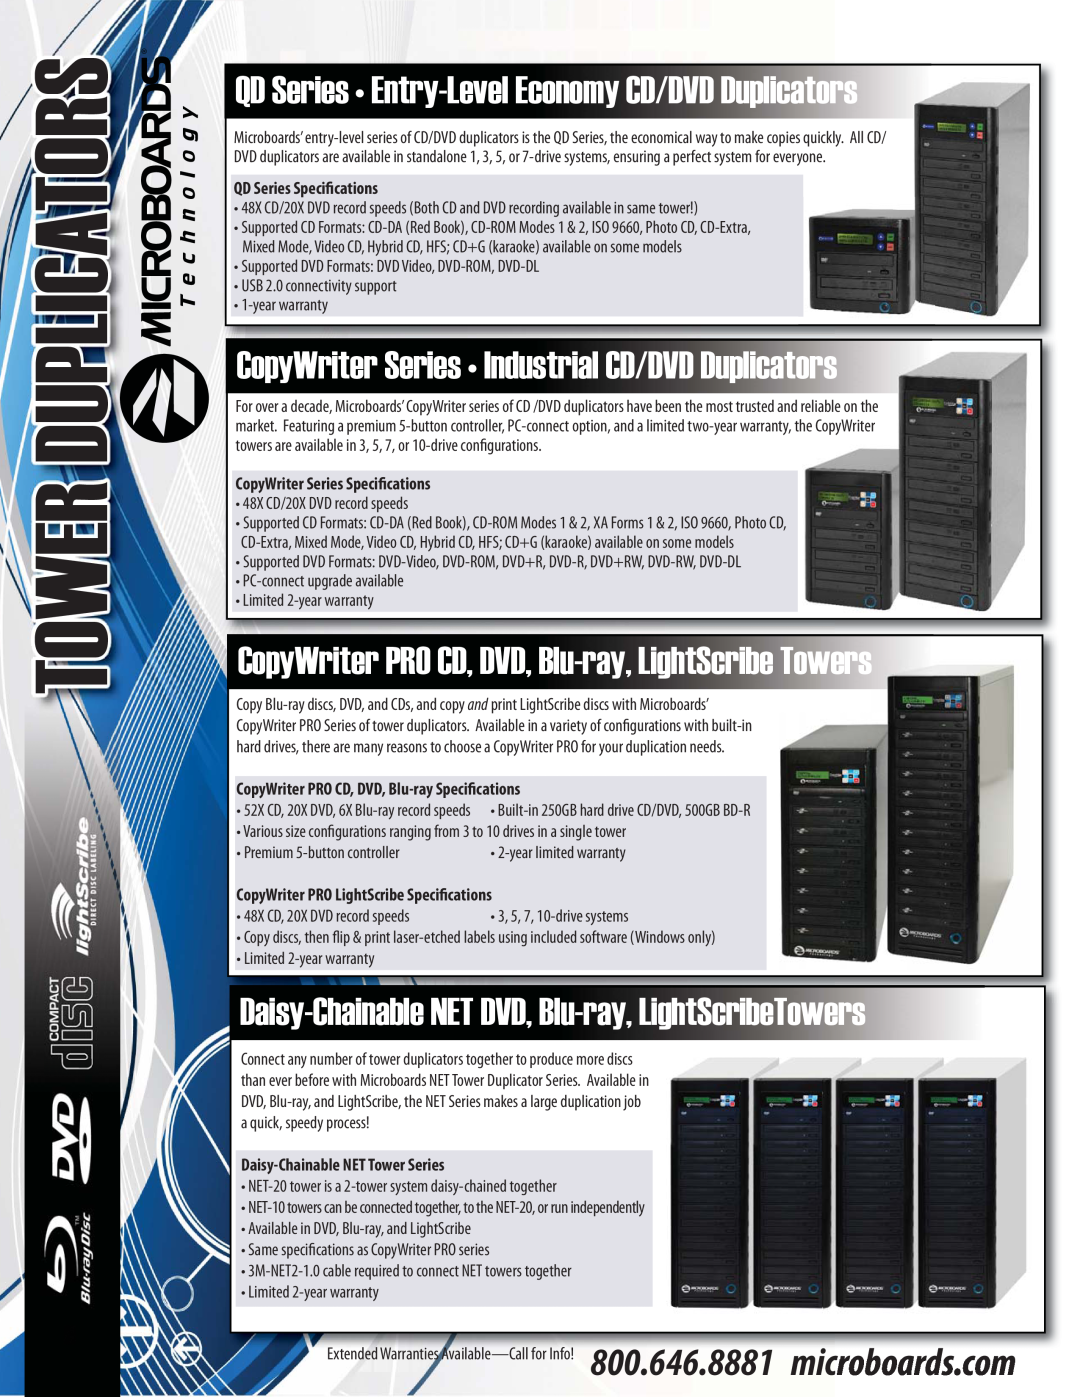 MicroBoards Technology CopyWriter PRO DVD warranty QD Series Entry-Level Economy CD/DVD Duplicators, Tower Duplicators 